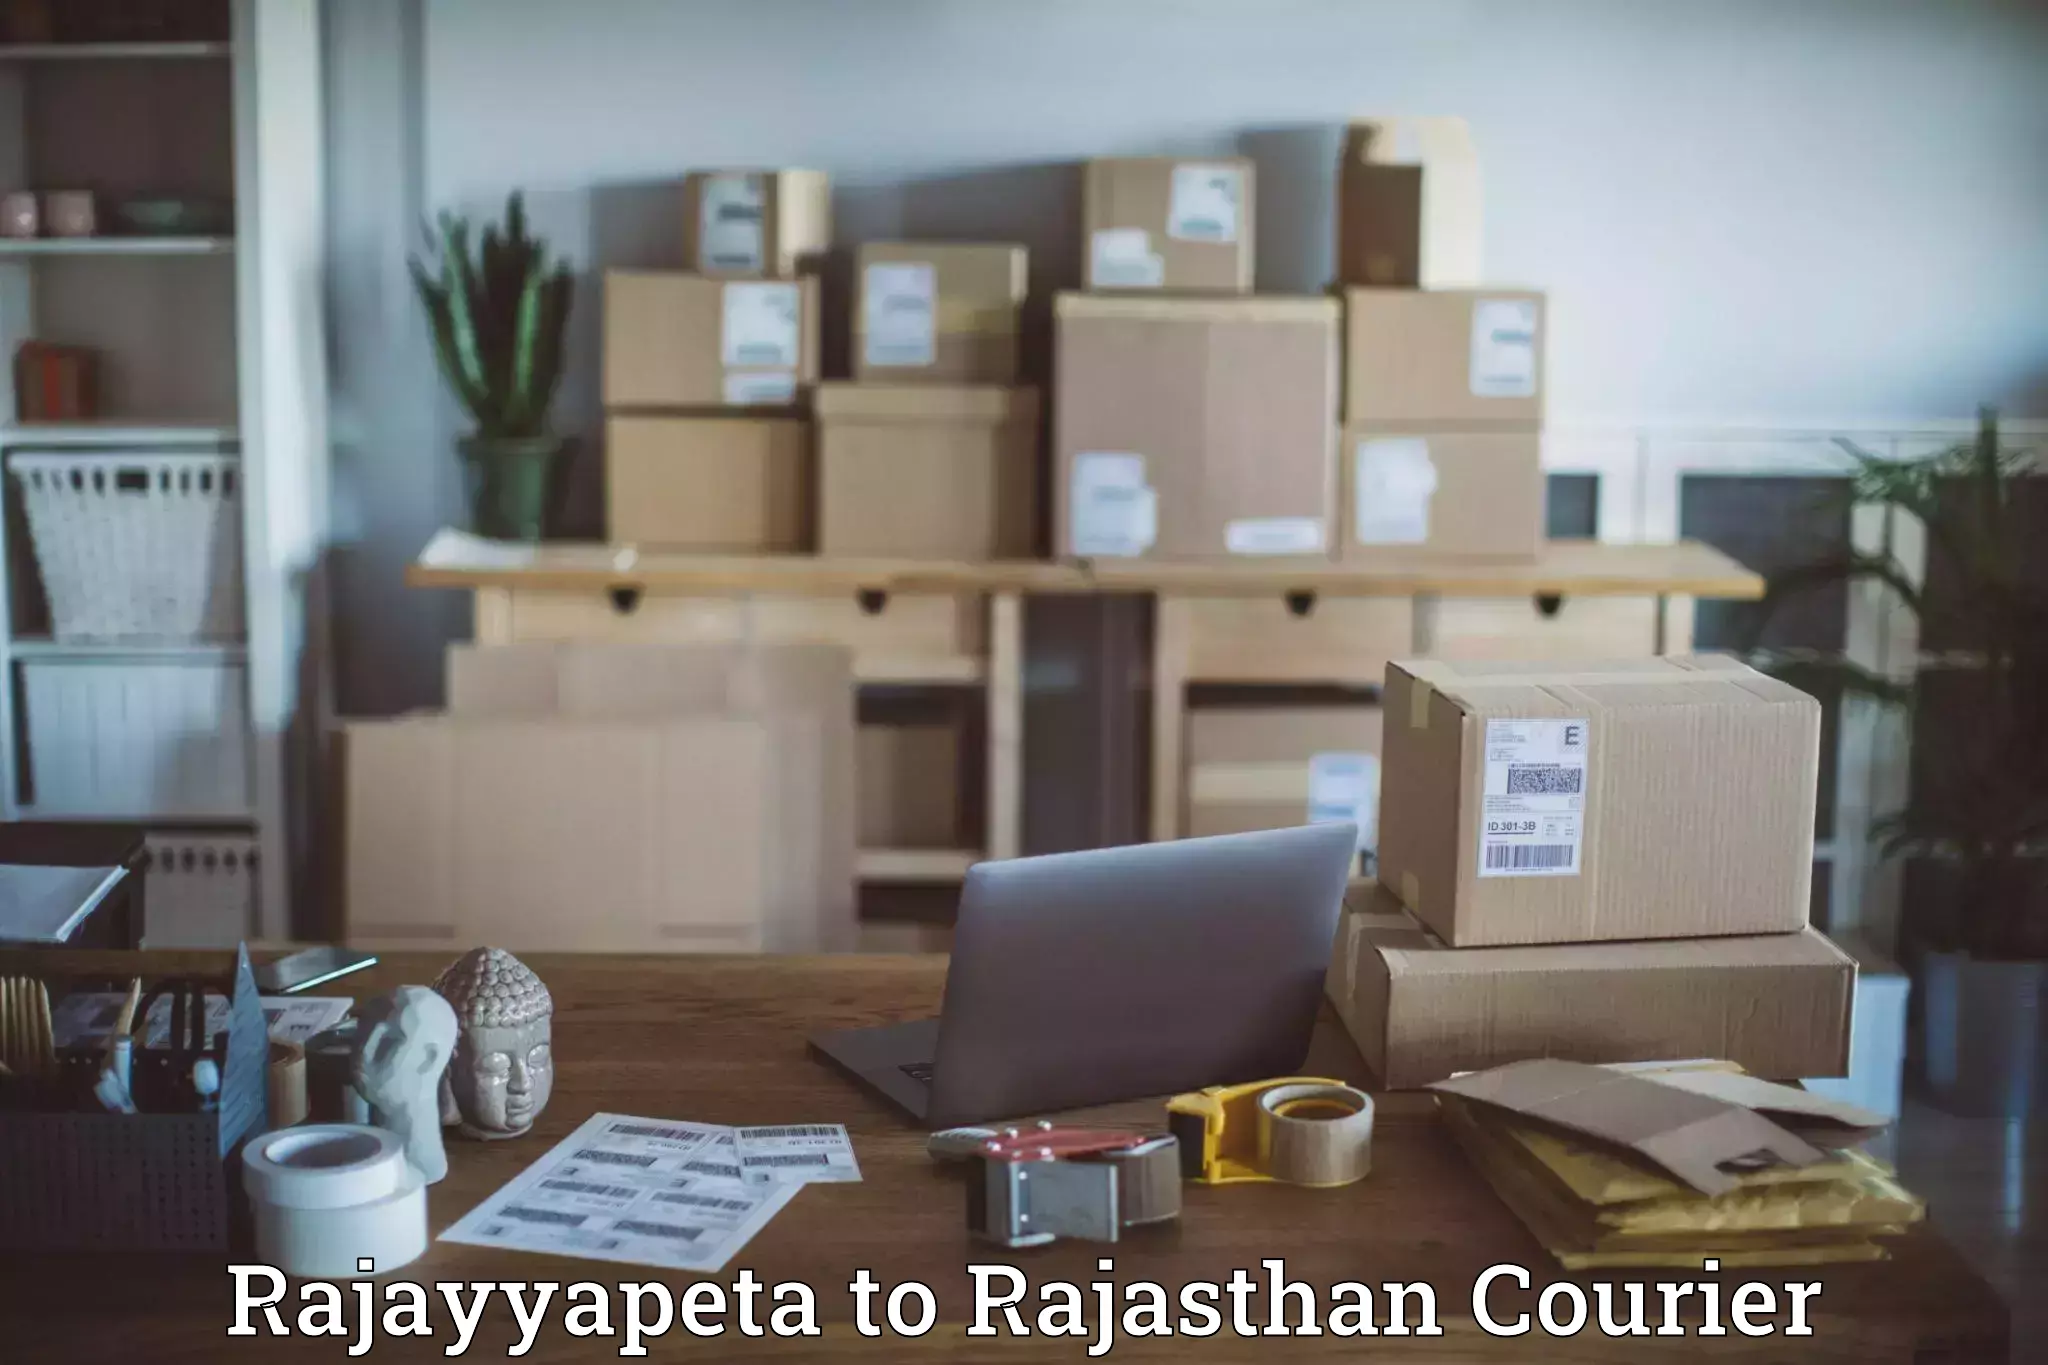 Doorstep delivery service Rajayyapeta to Yathalakunta